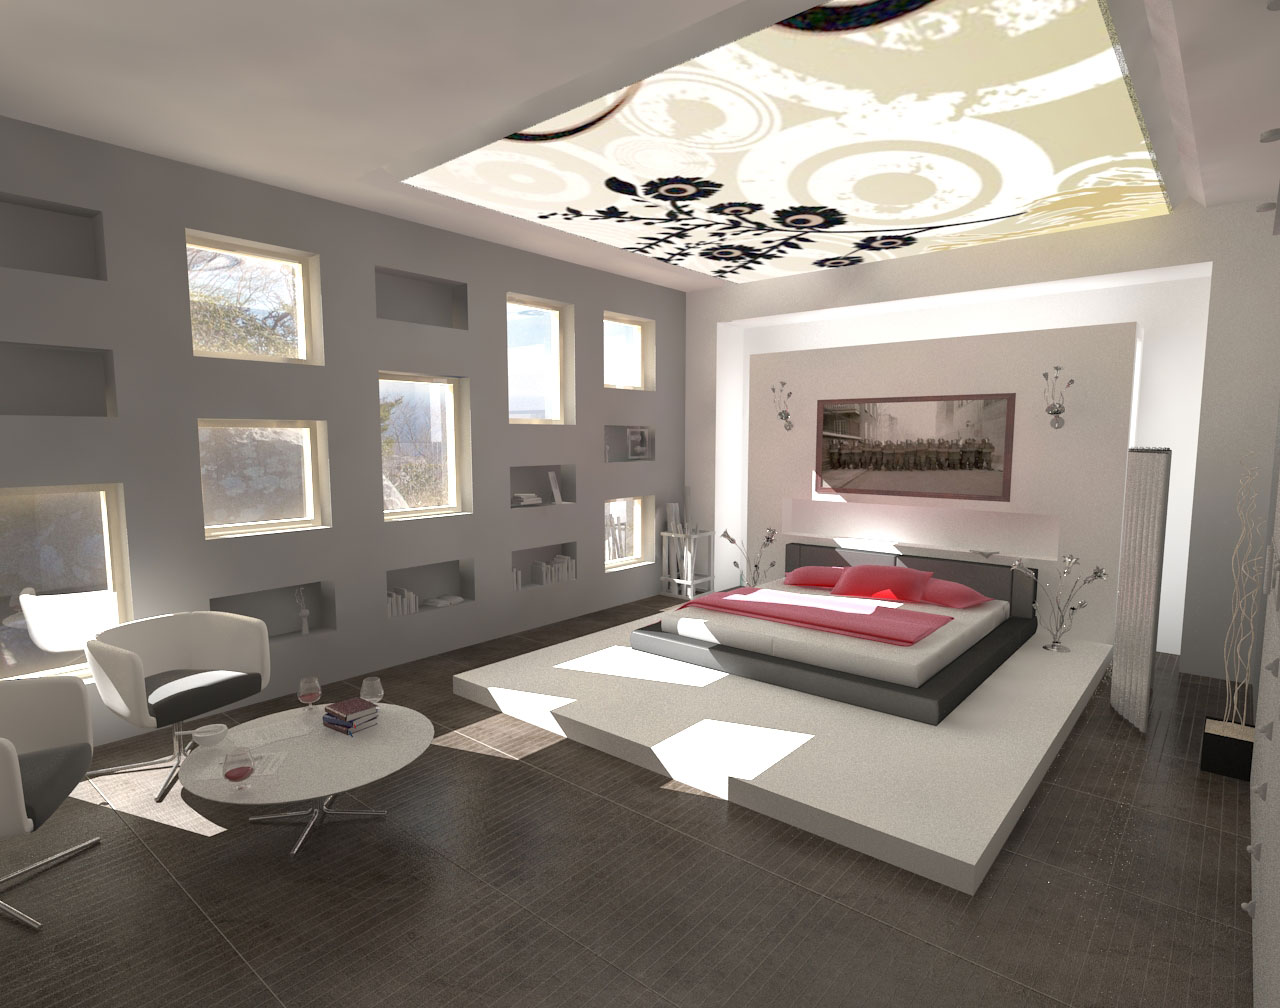 Modern Home Interior Design Bedrooms